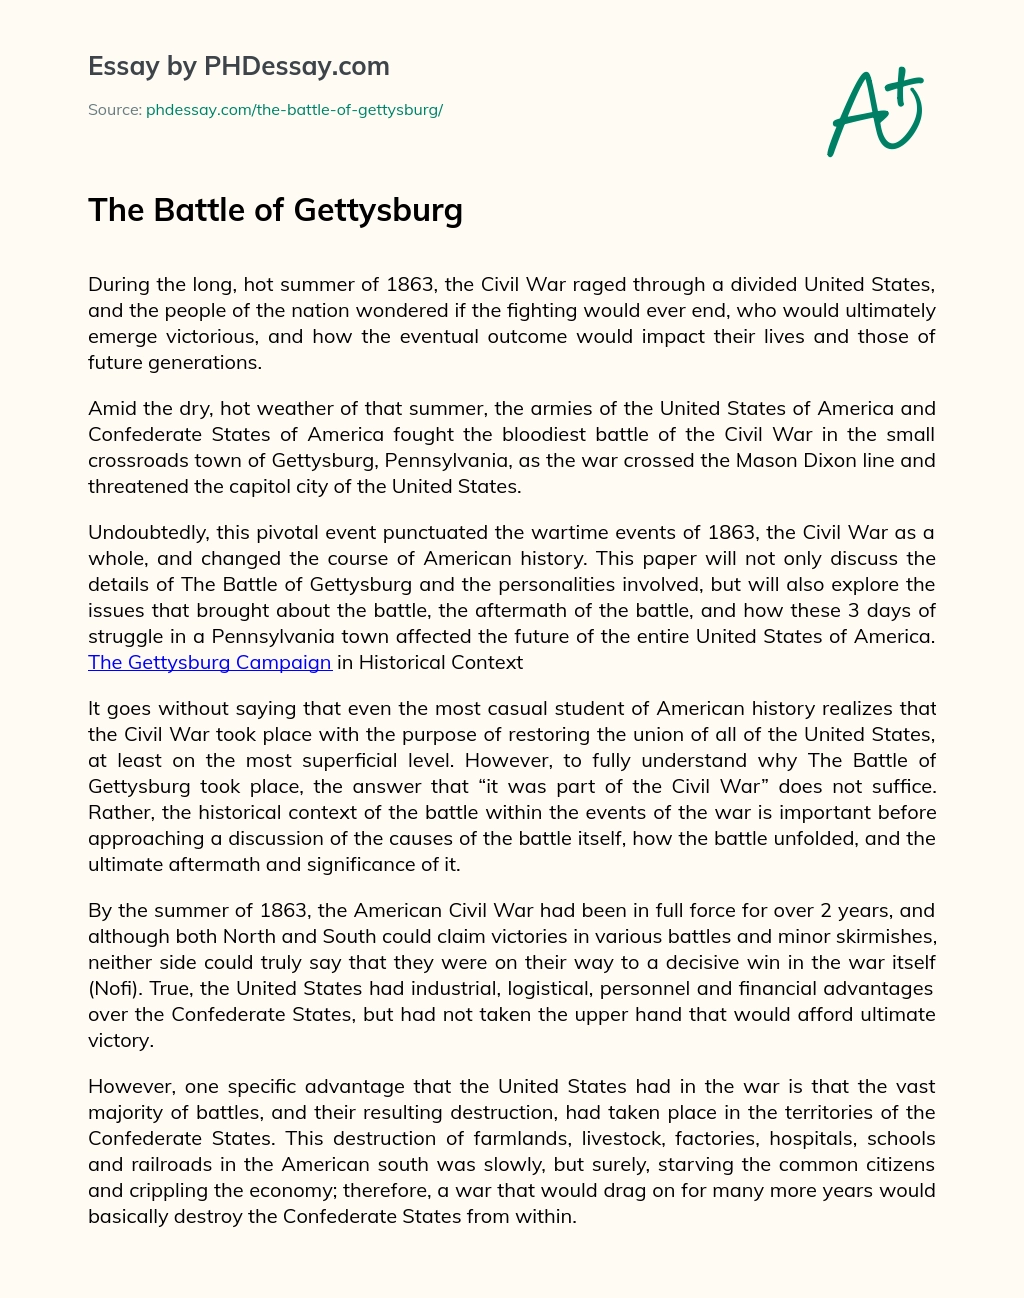 The Battle of Gettysburg essay